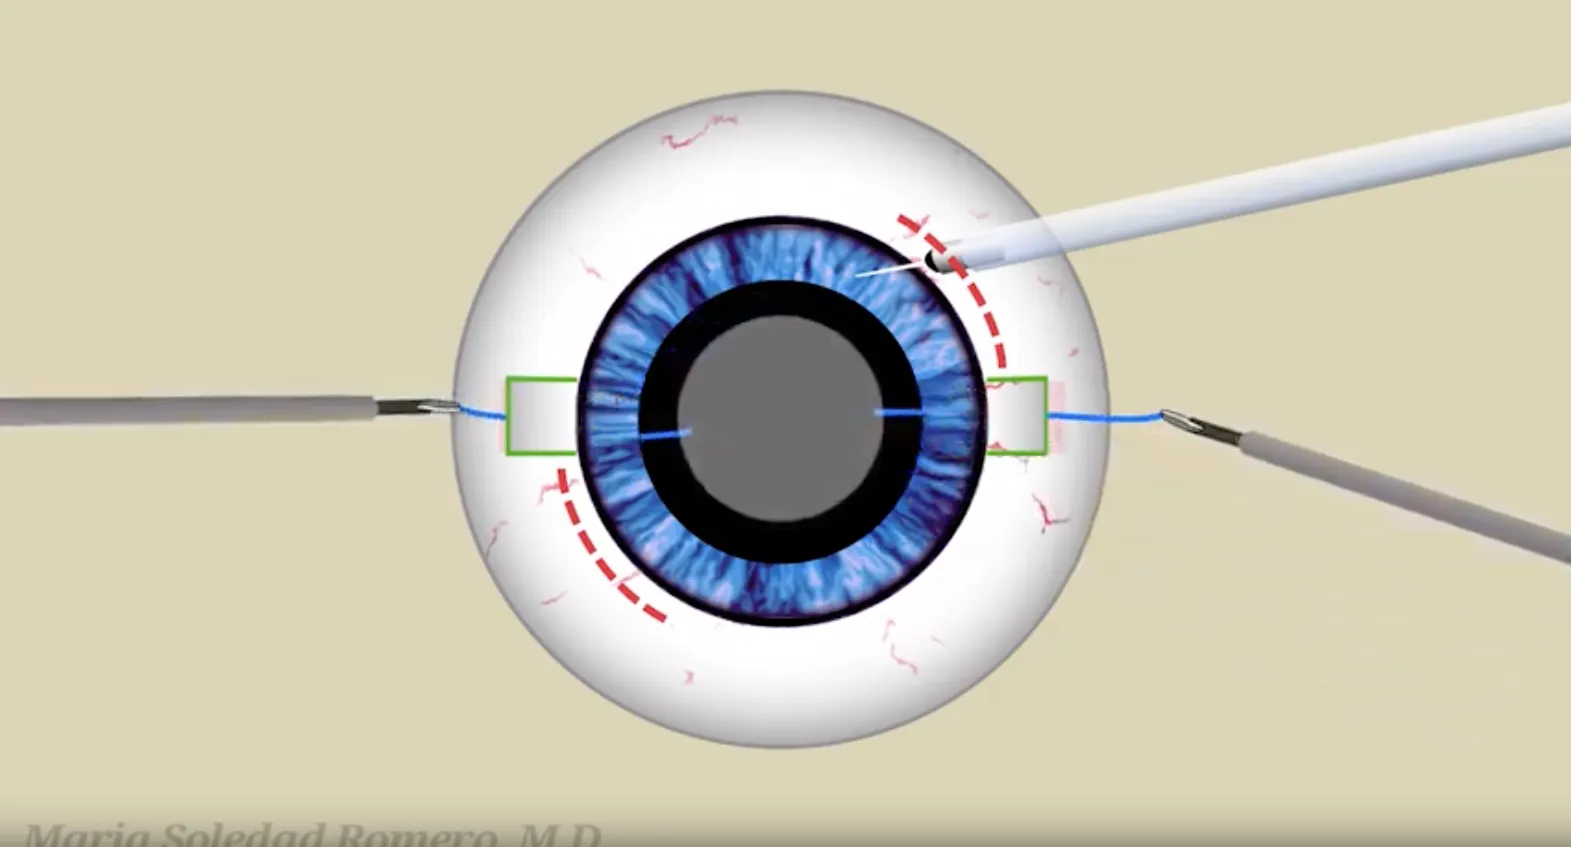 Complex Eye Procedures, Referrals & Second Opinions